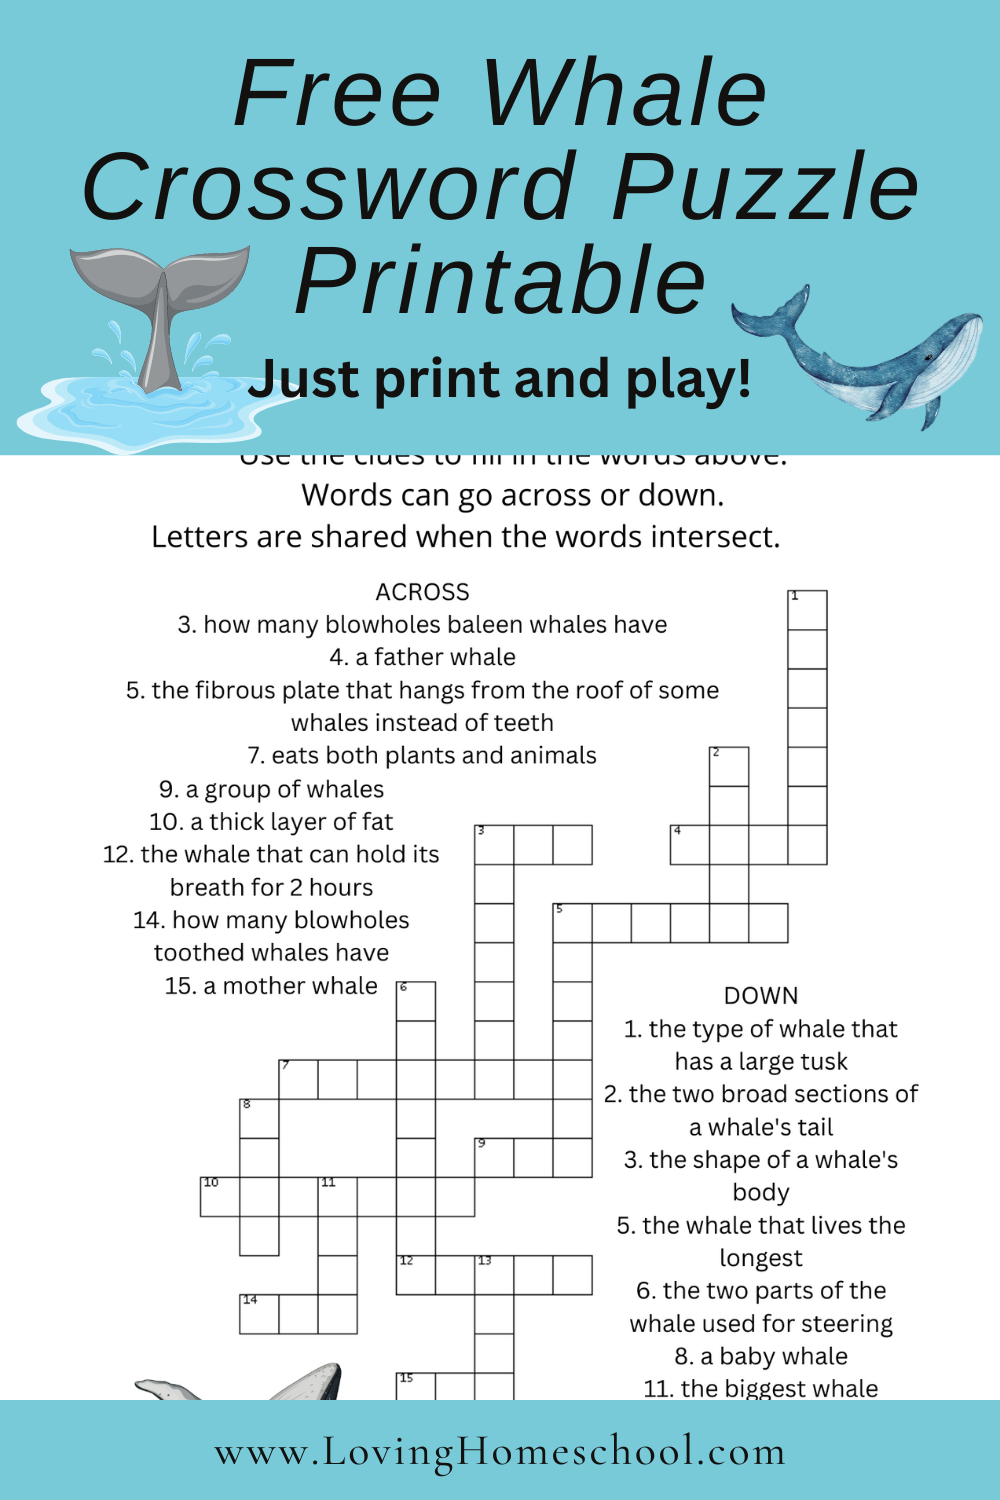 Free Whale Crossword Puzzle